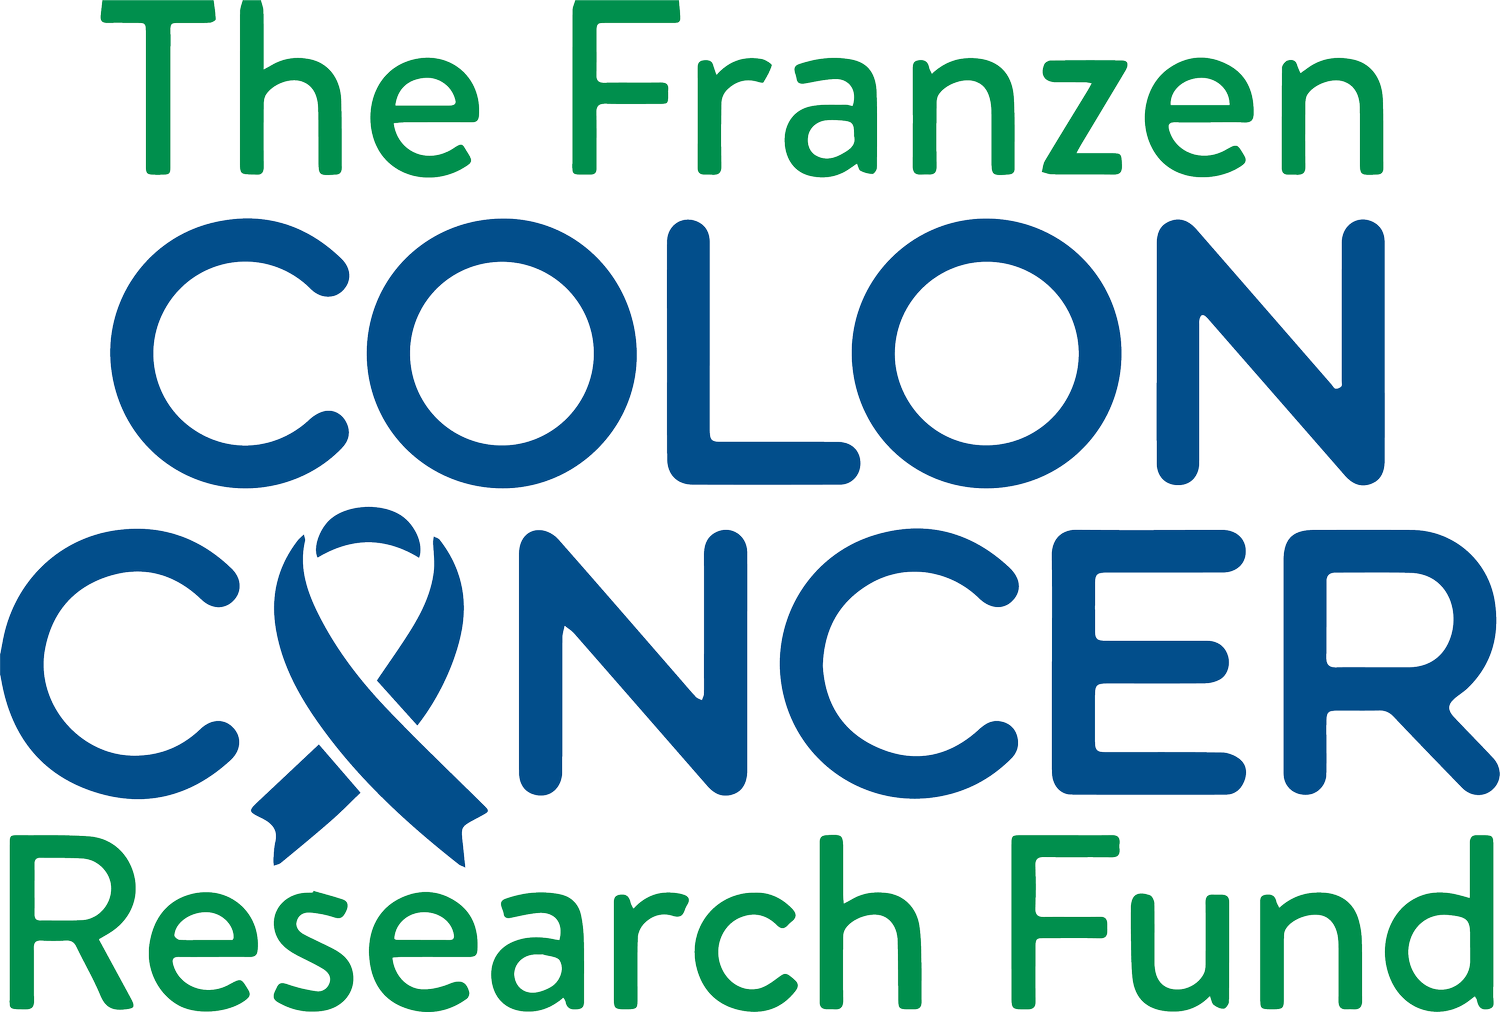 Franzen Colon Cancer Research Fund